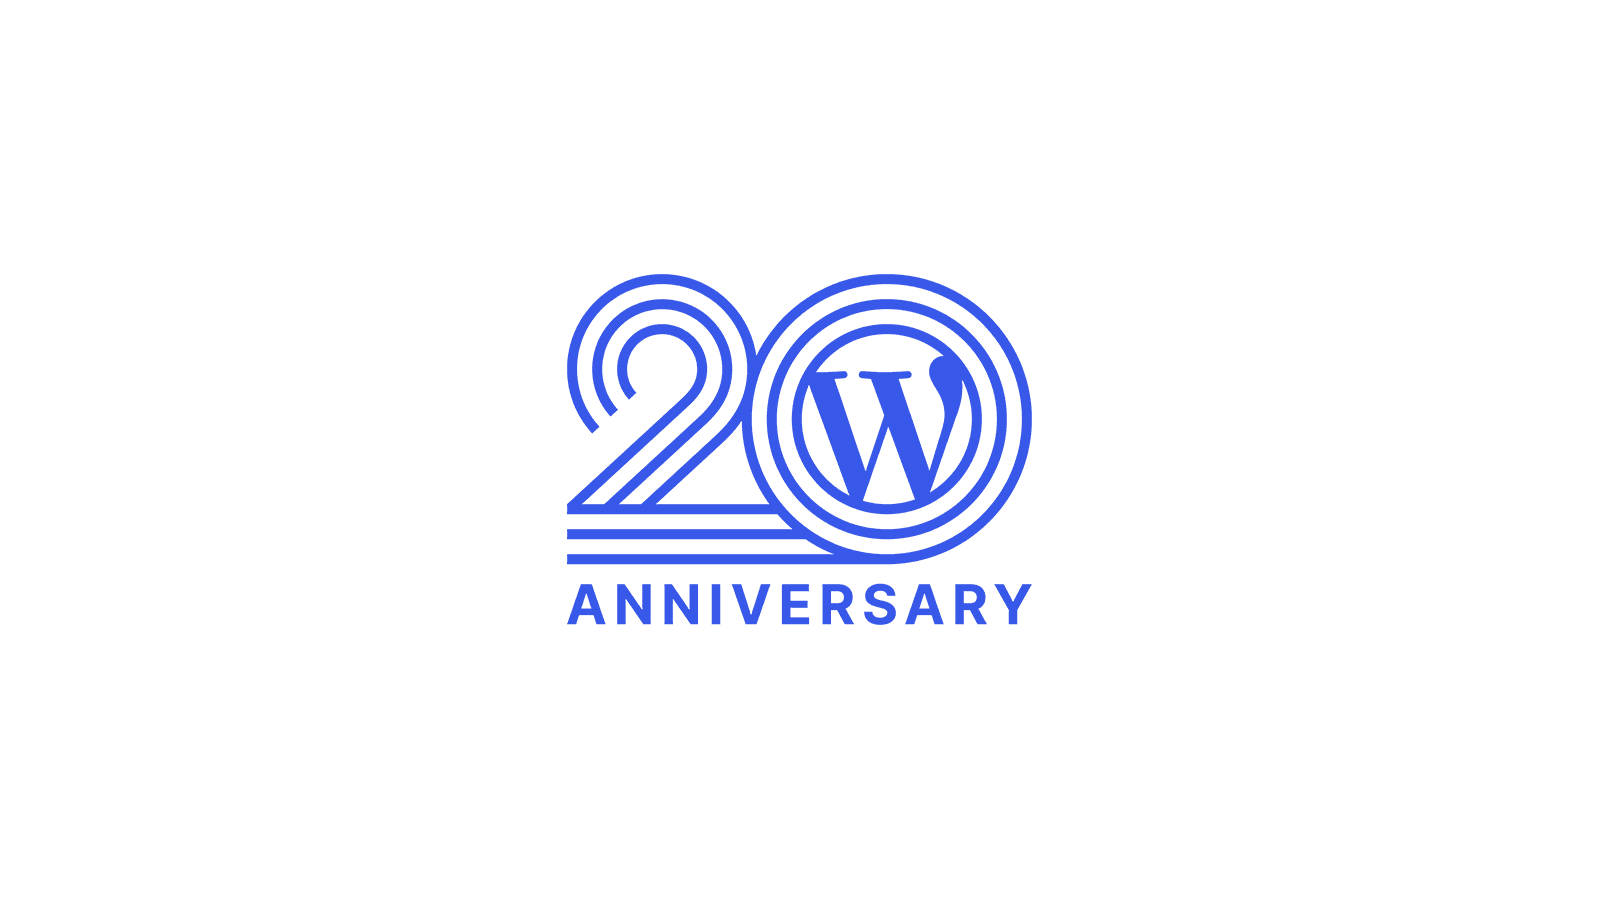 WordPress 20th Anniversary Logo